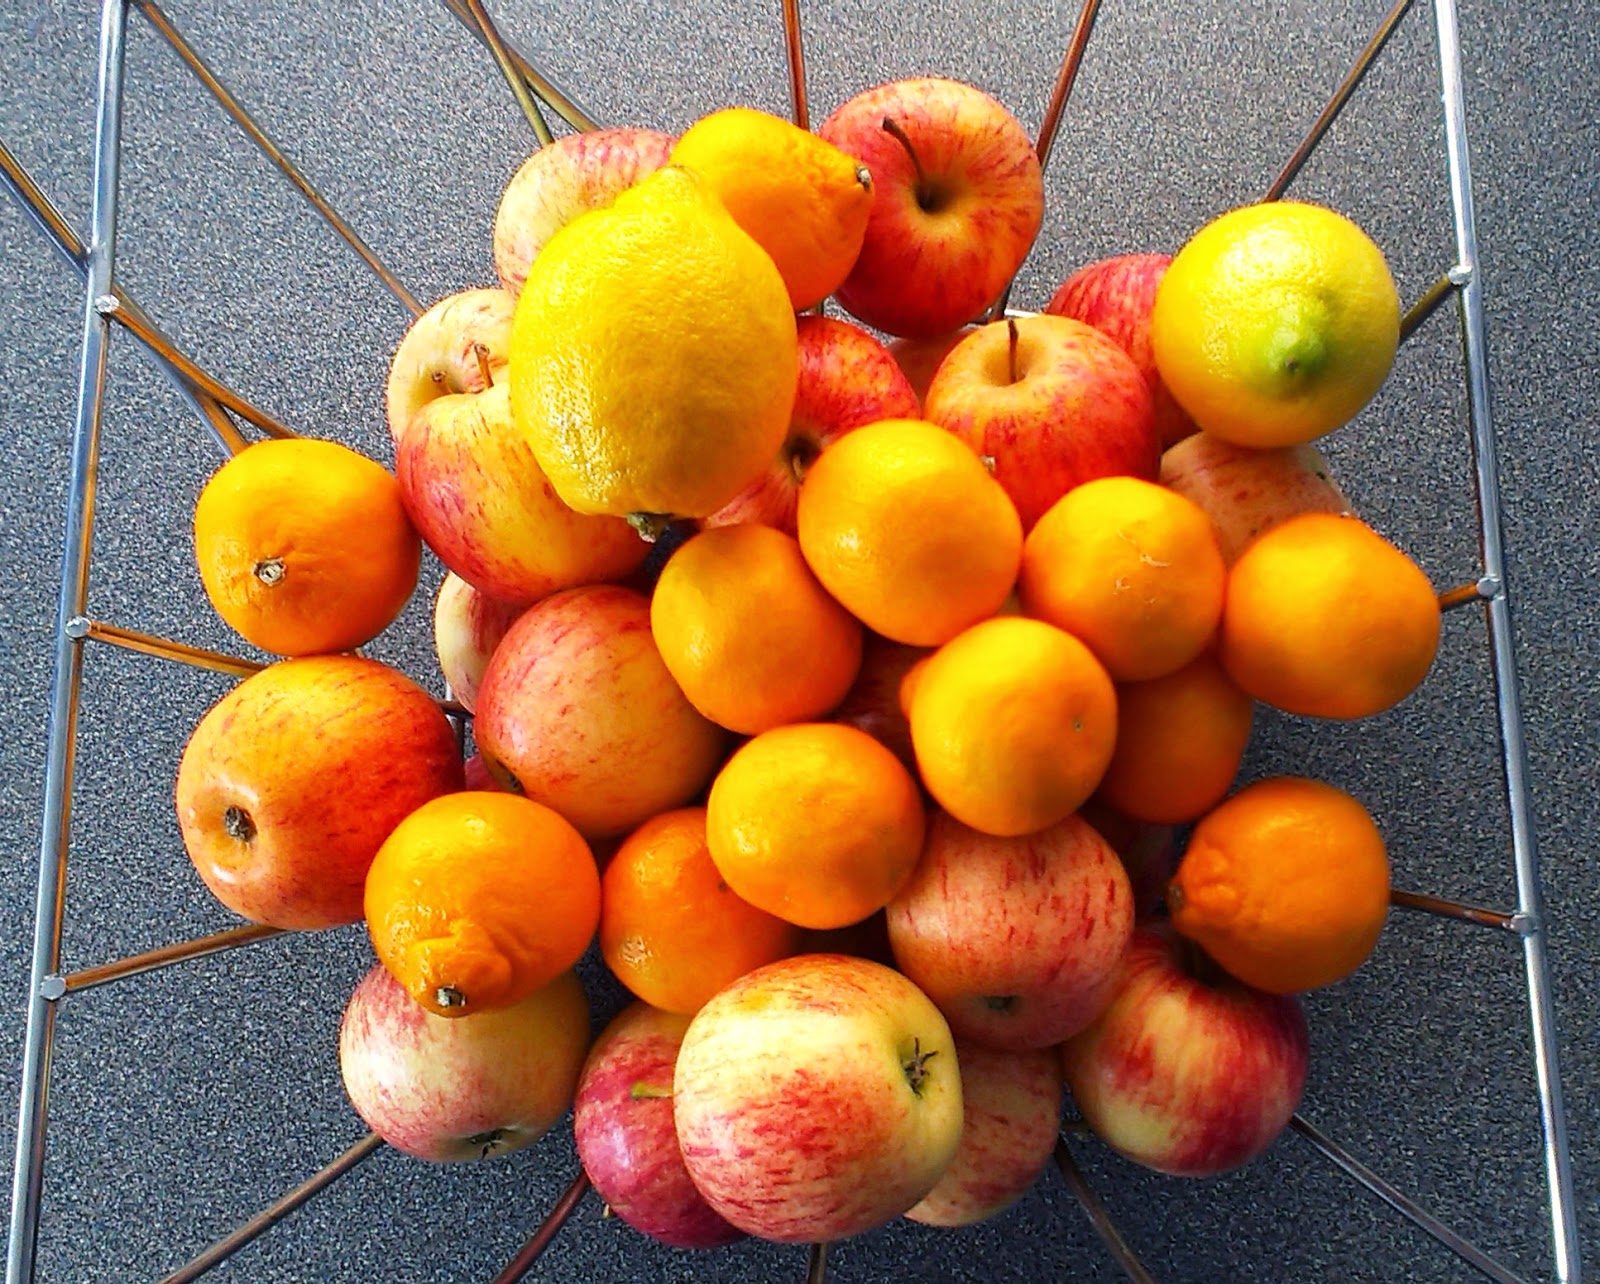 Healthy living - fruit